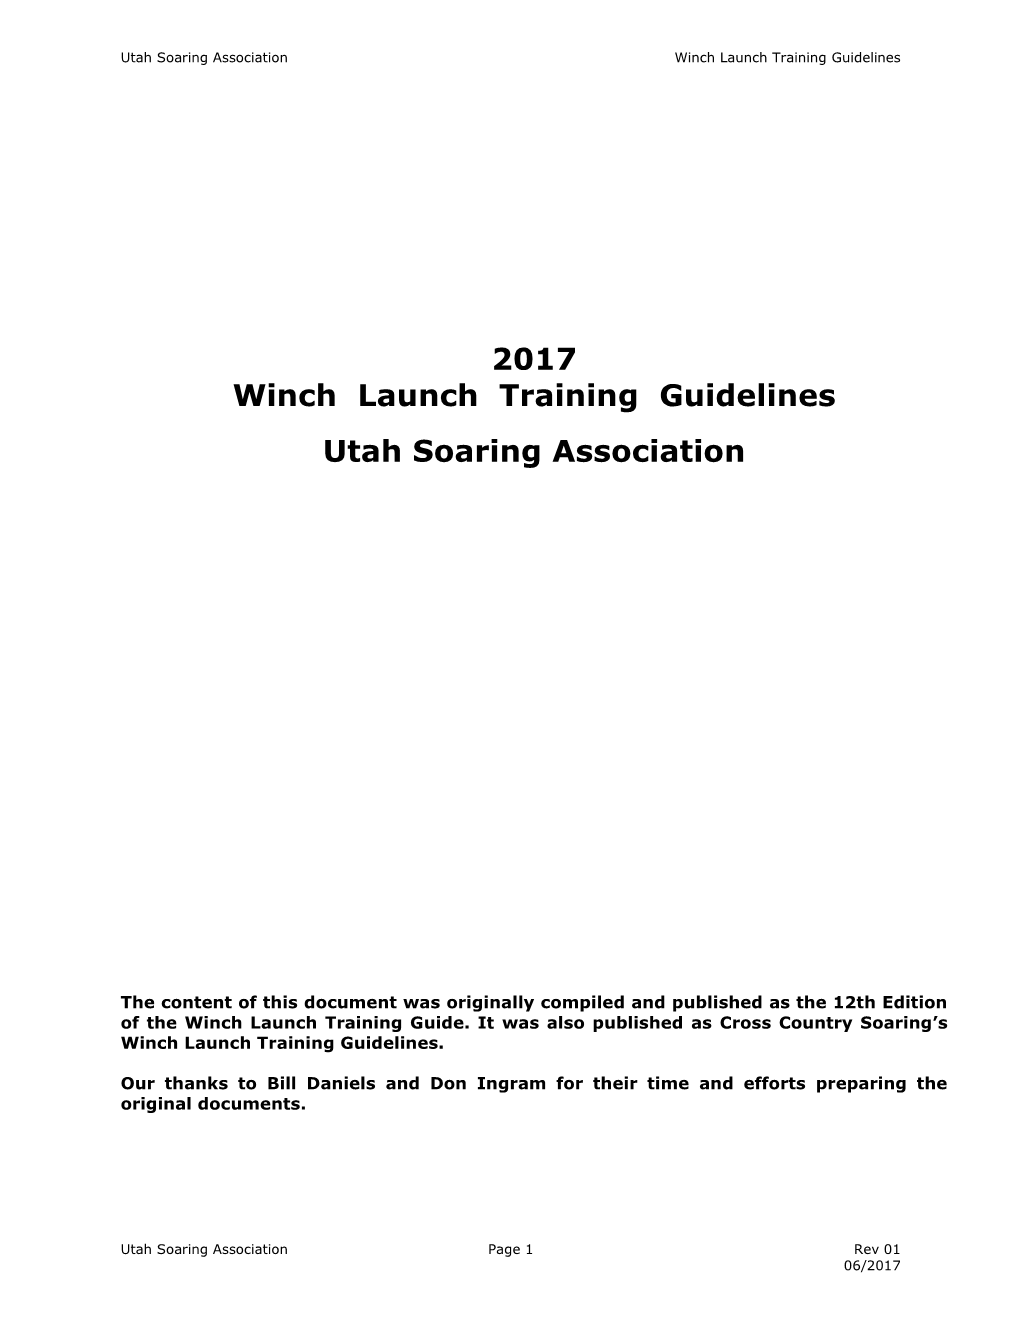 2017 Winch Launch Training Guidelines Utah Soaring Association